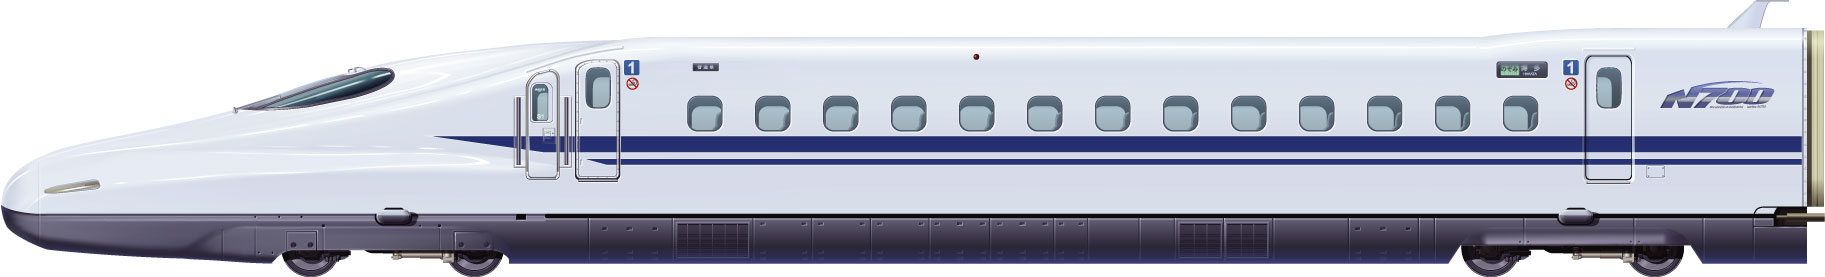 Jr 新幹線n700系 サイドビューイラスト